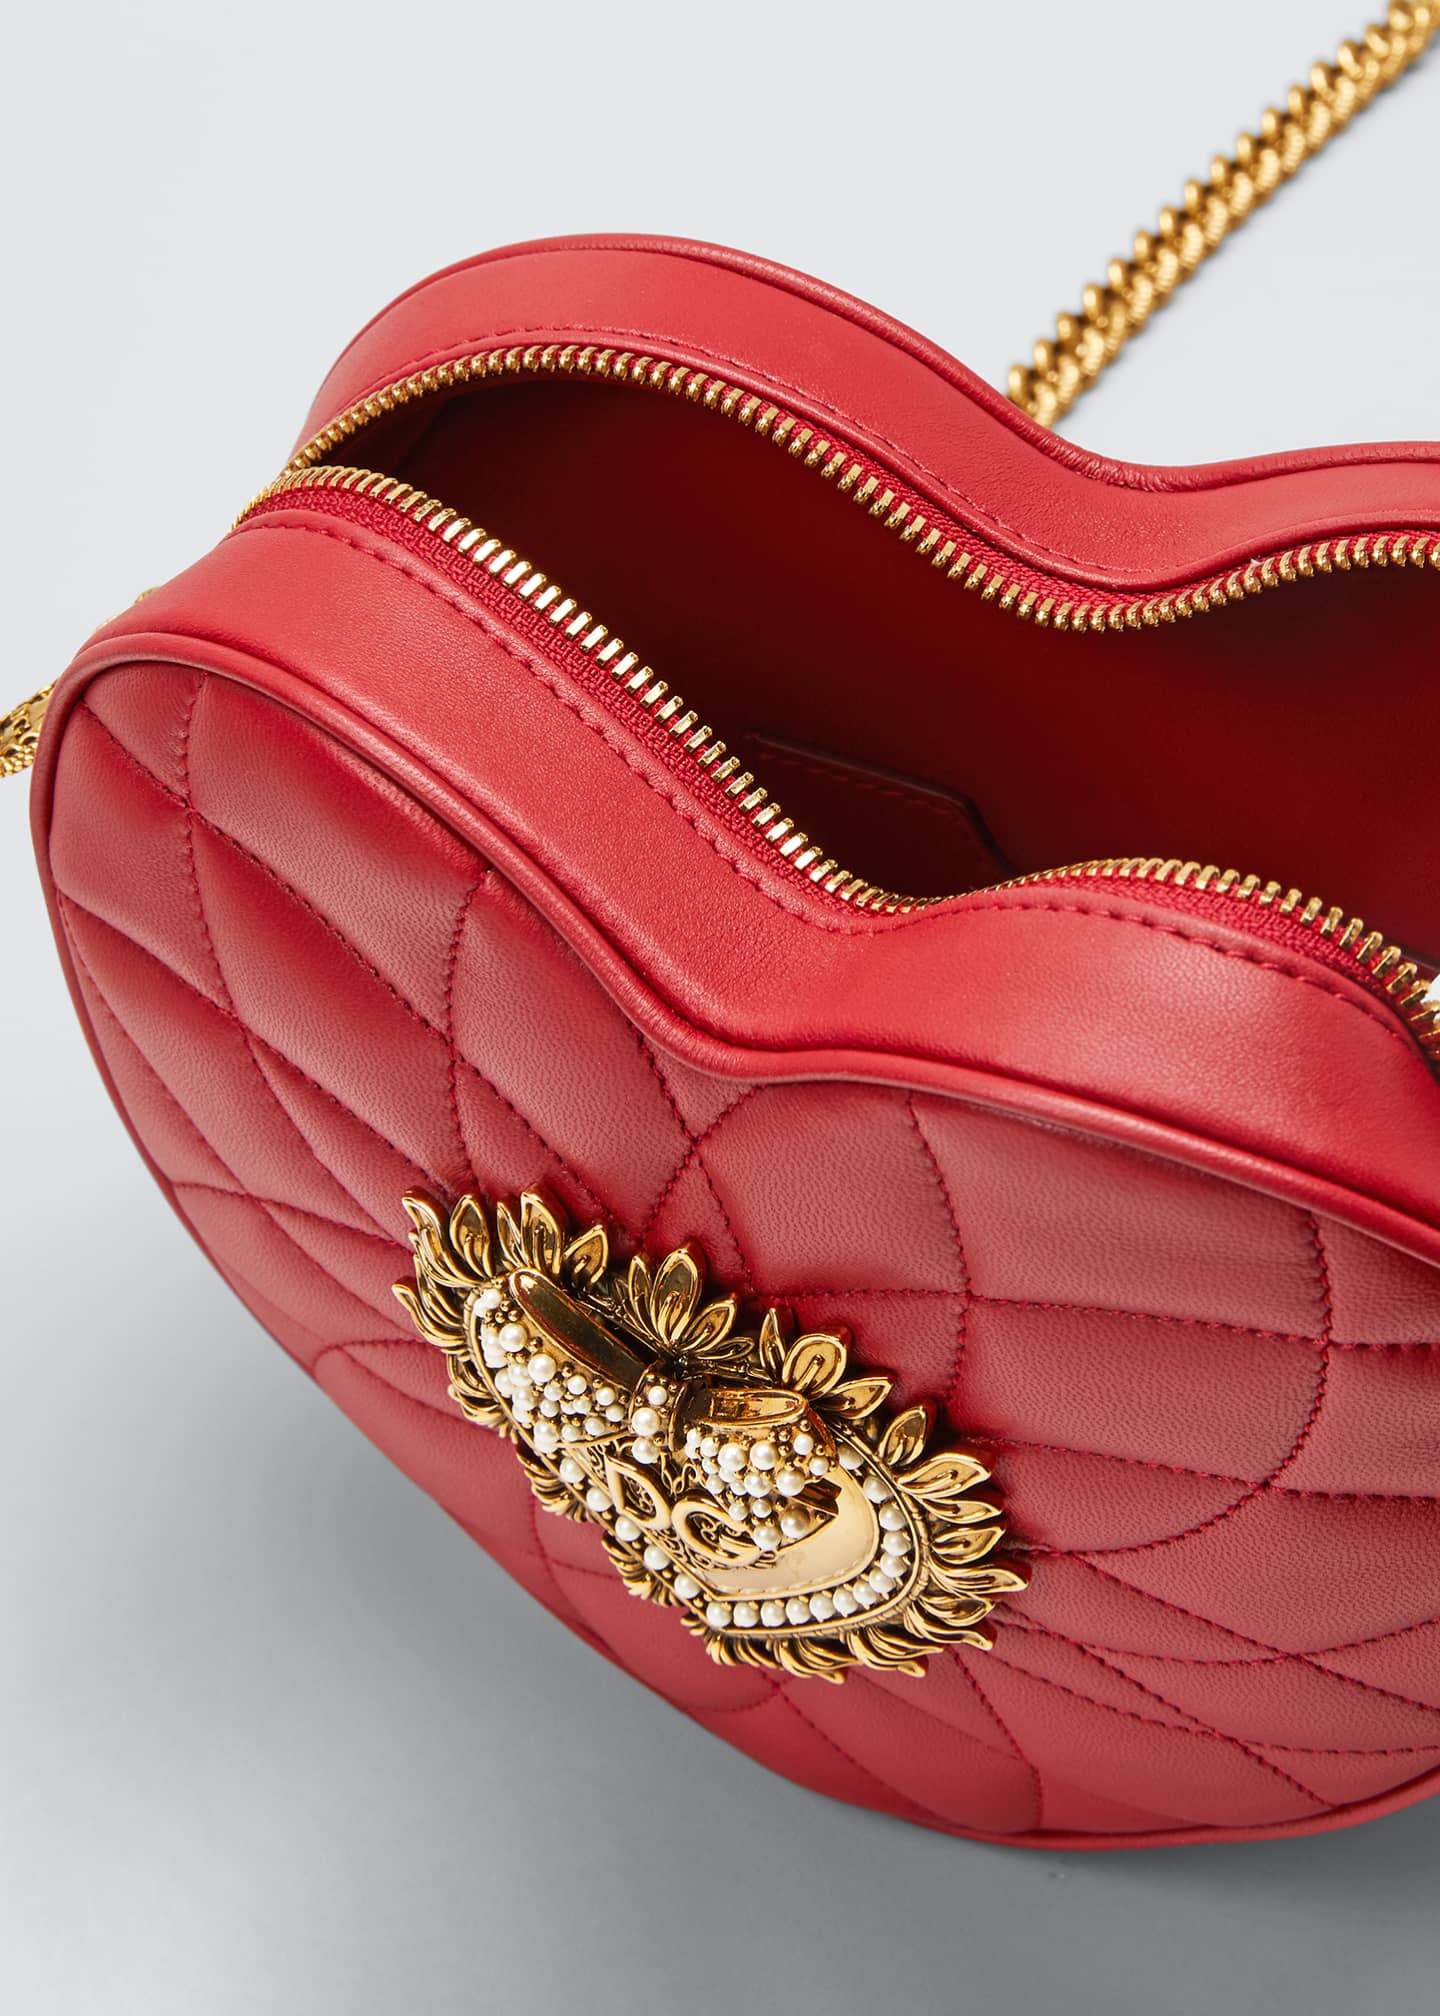 Dolce & Gabbana Devotion Heart Zip Crossbody Bag - Bergdorf Goodman